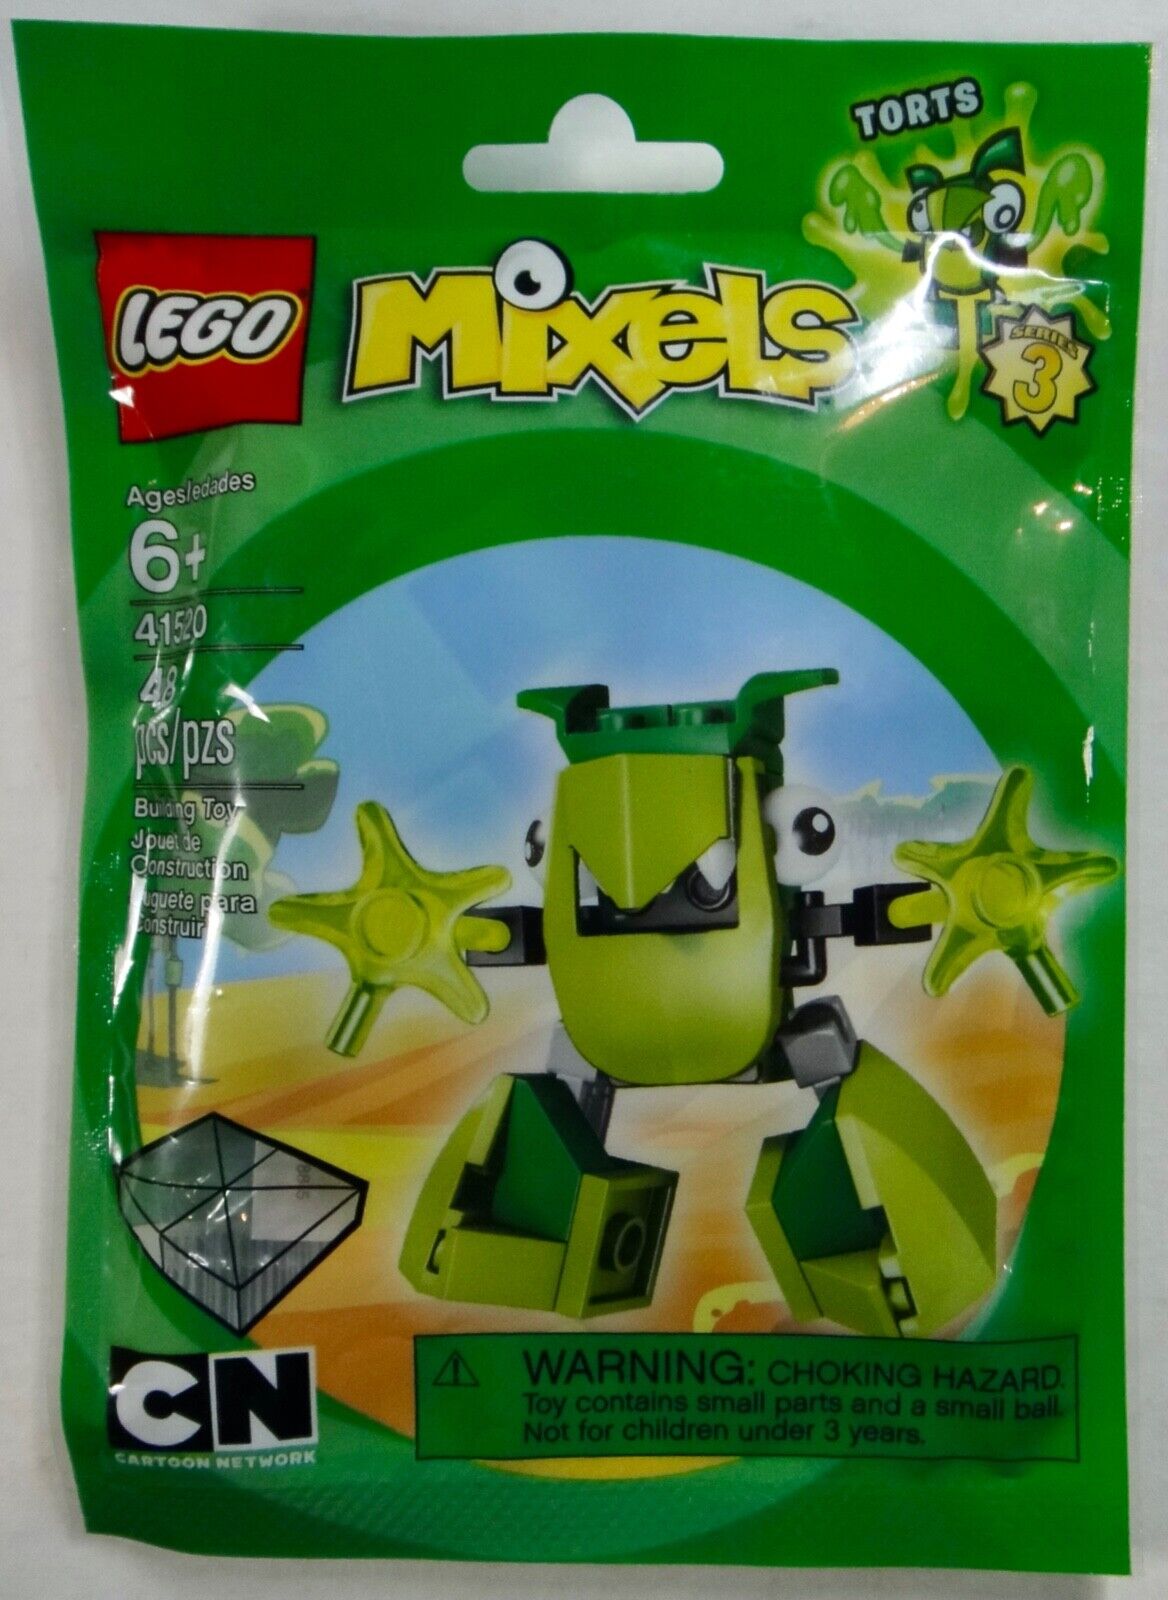 LEGO Mixels Series 3: (41520) Torts - NEW / Sealed